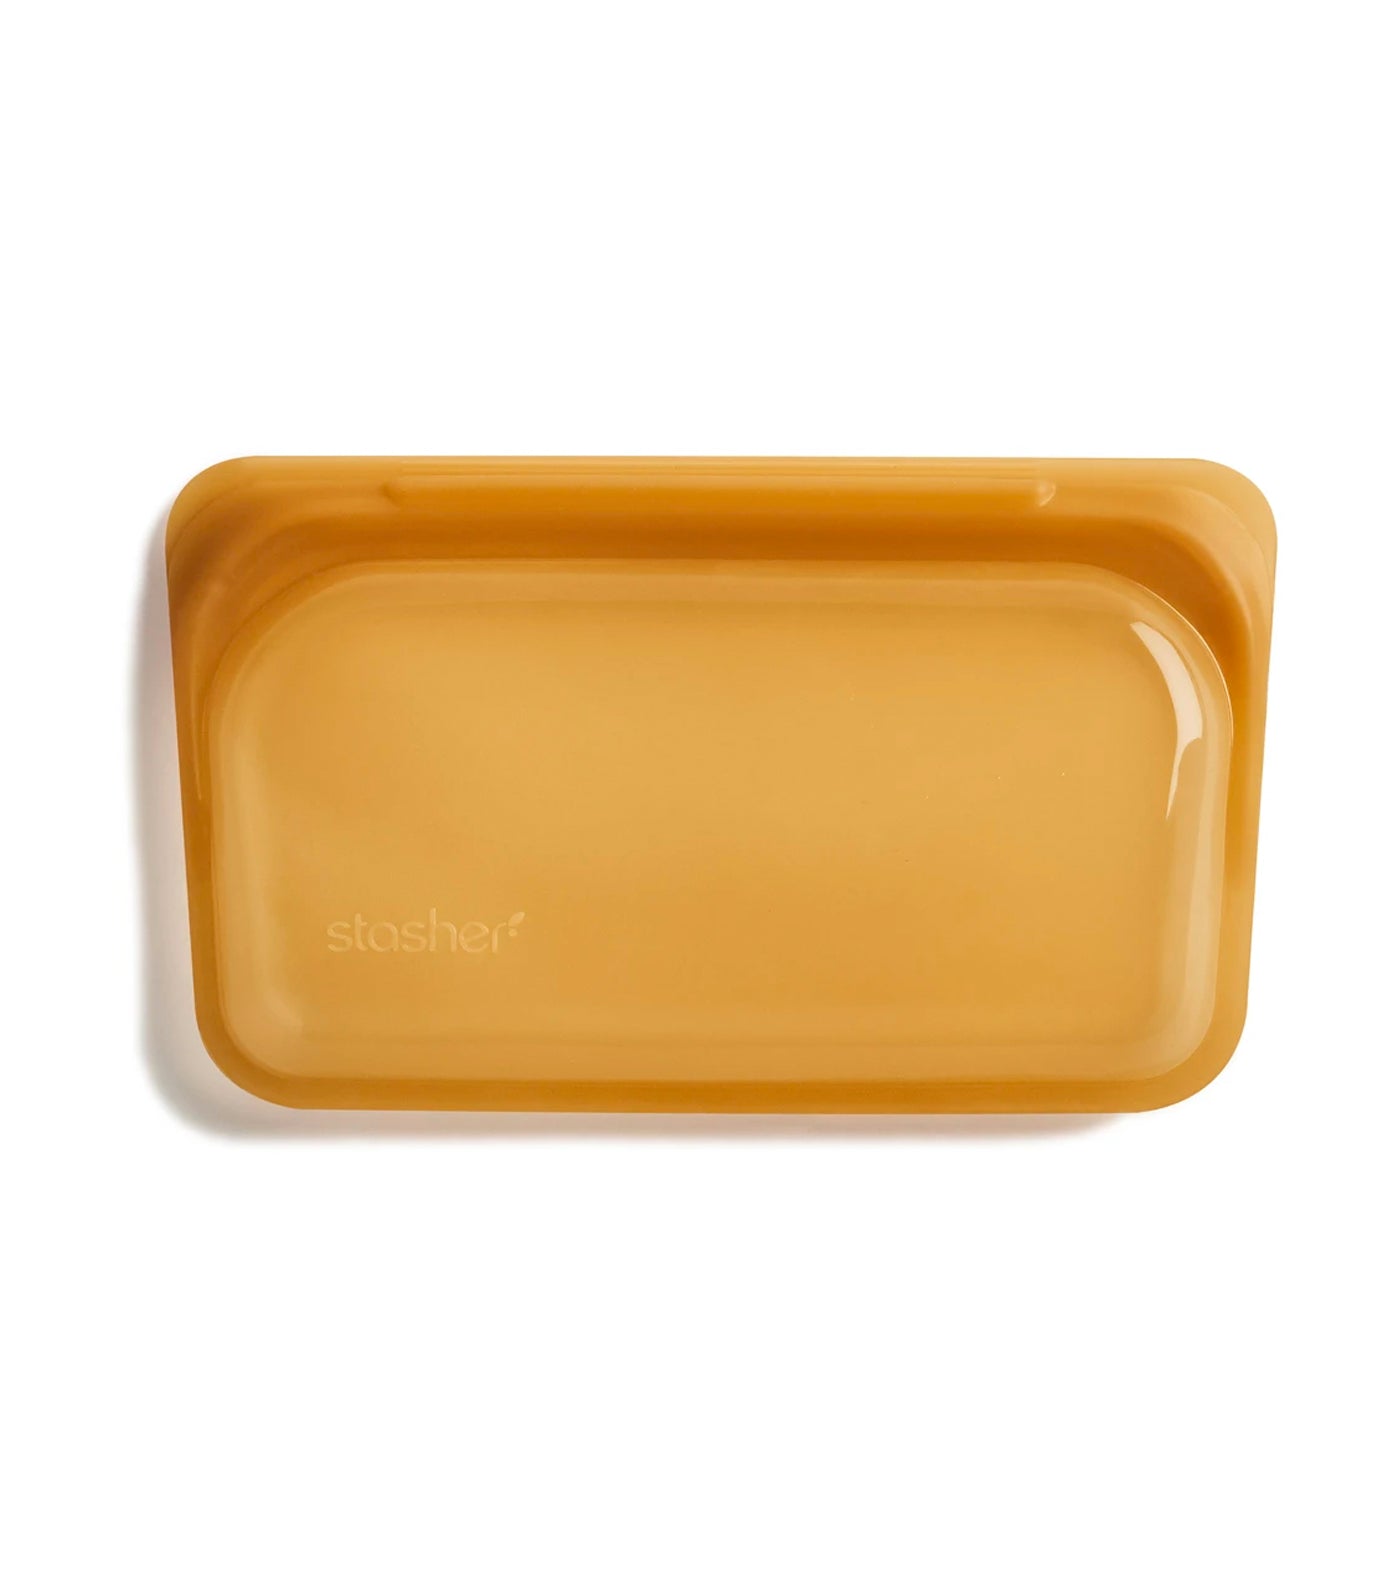 Stasher Reusable Silicone Snack Bag - Honey